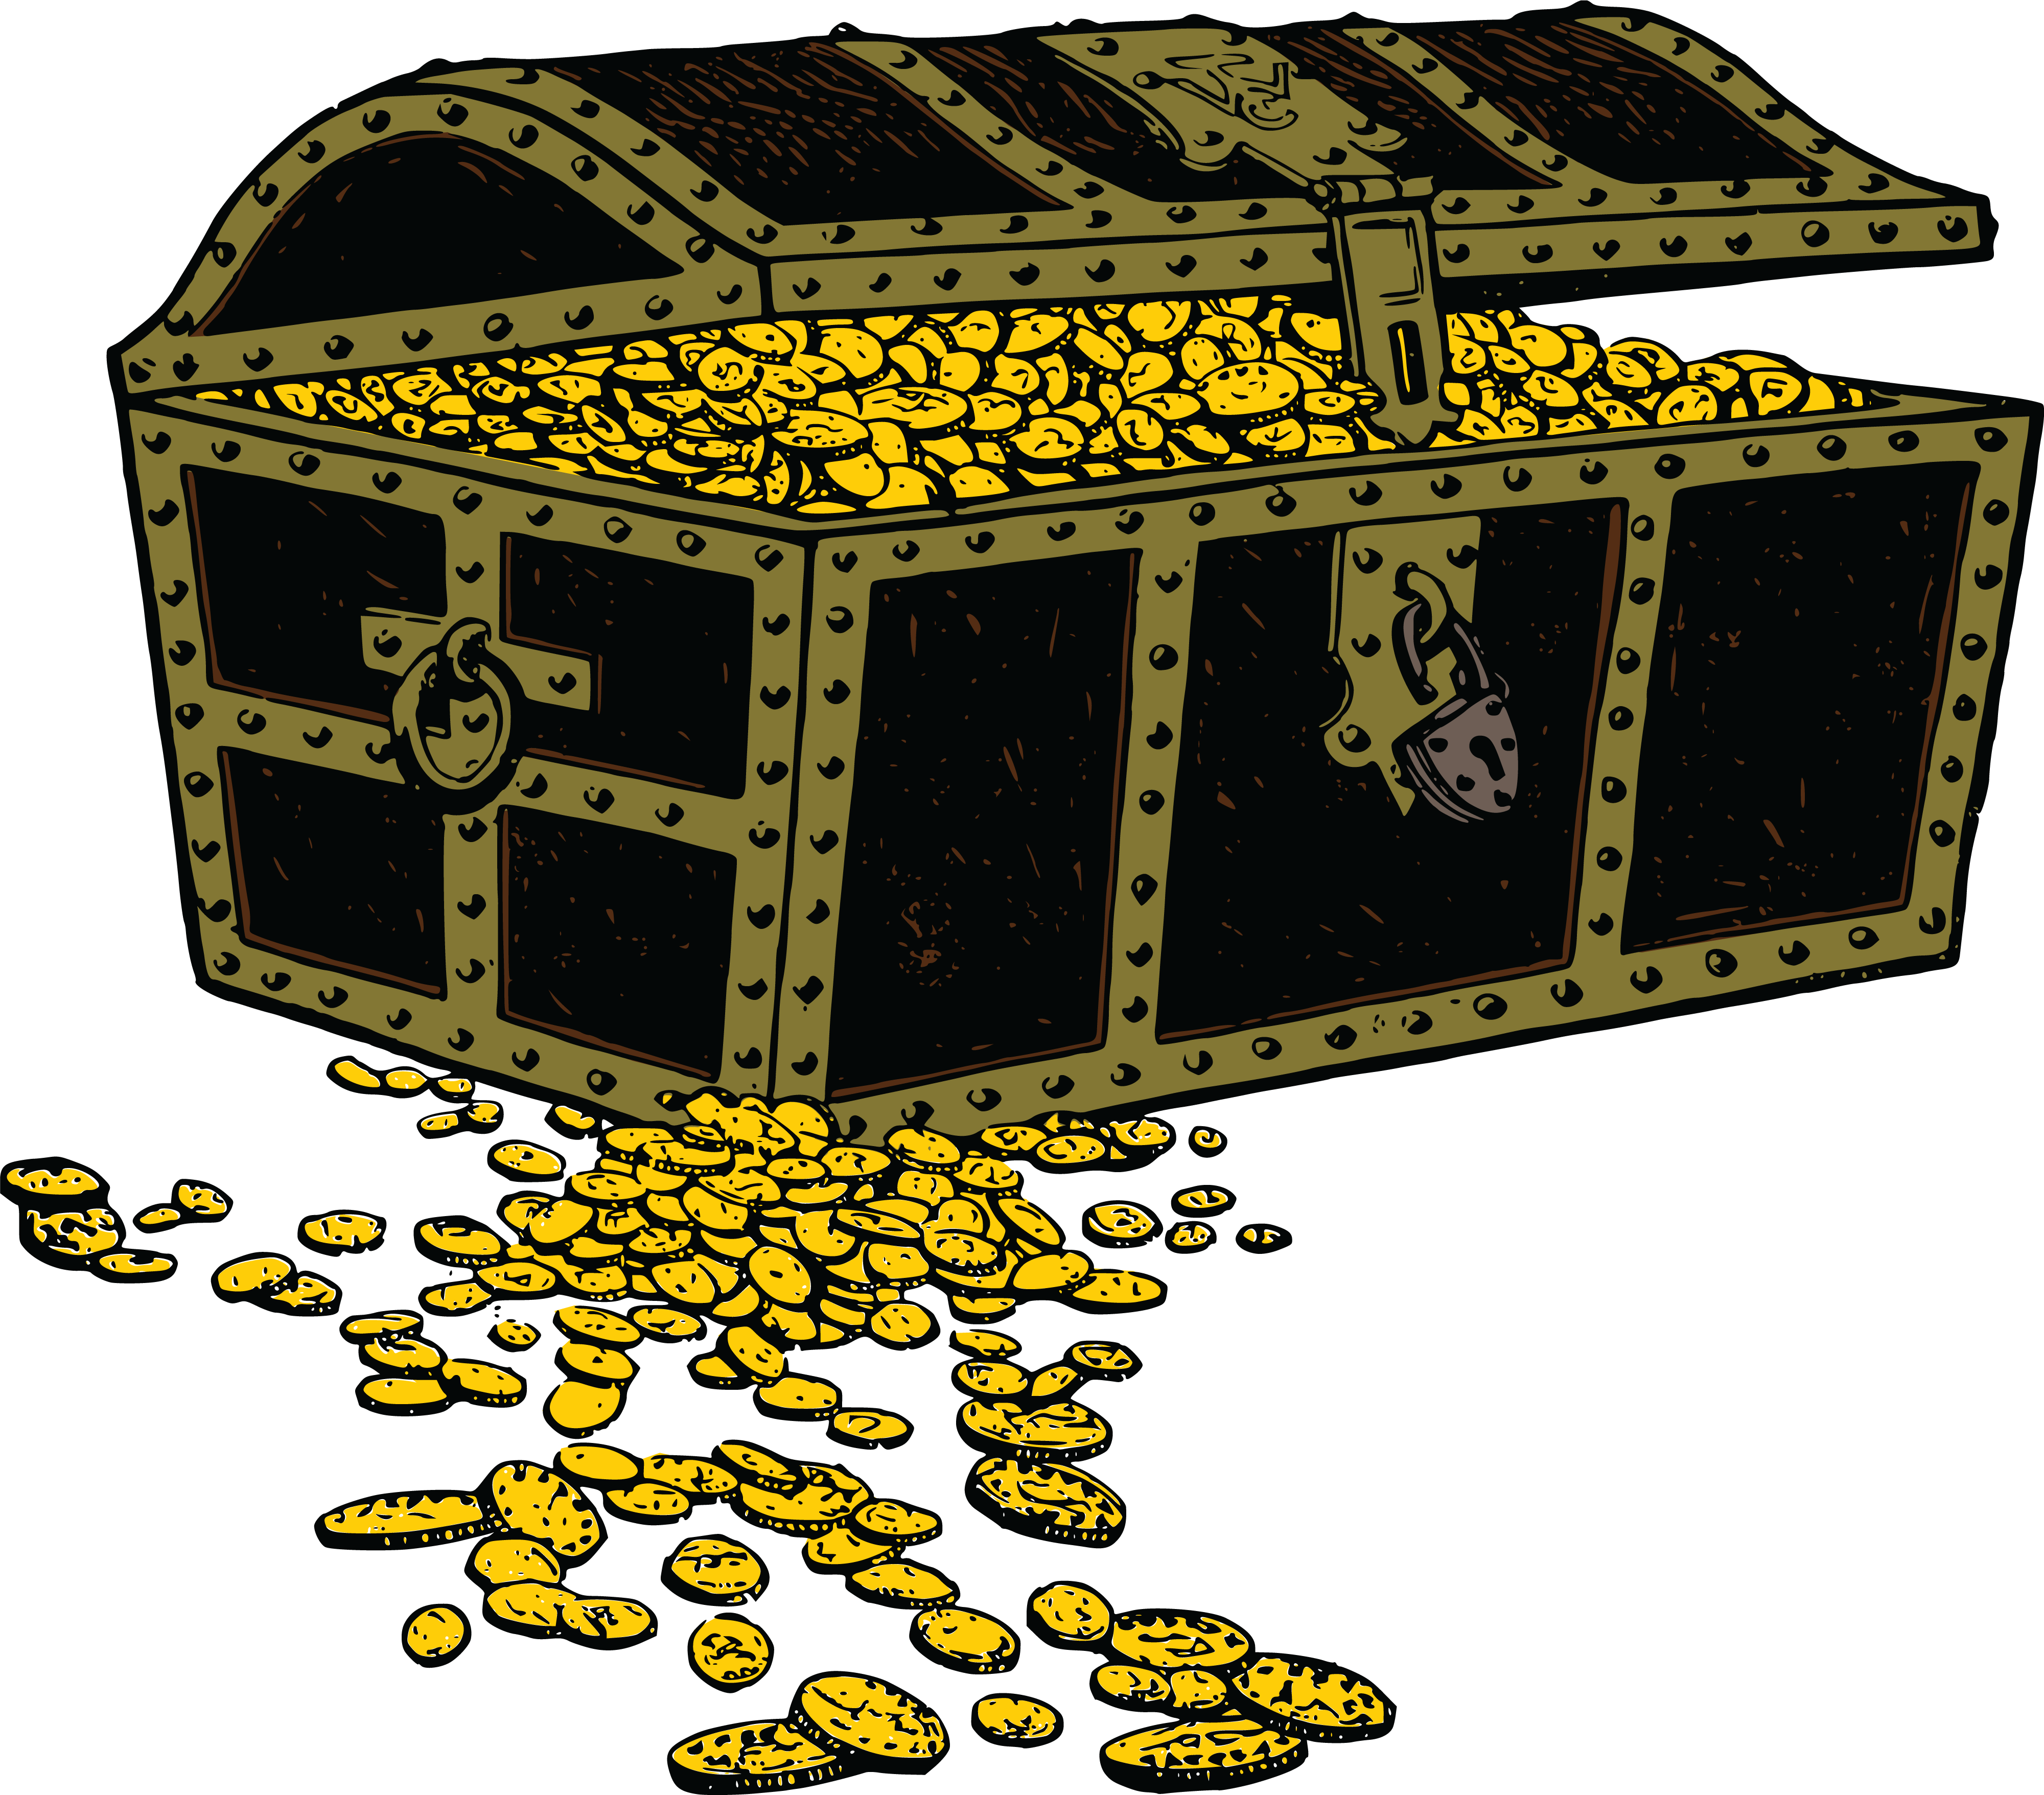 T treasure. Сундук с золотом. Сундук с золотыми монетами. Пиратский клад. Пиратский сундук с золотом.